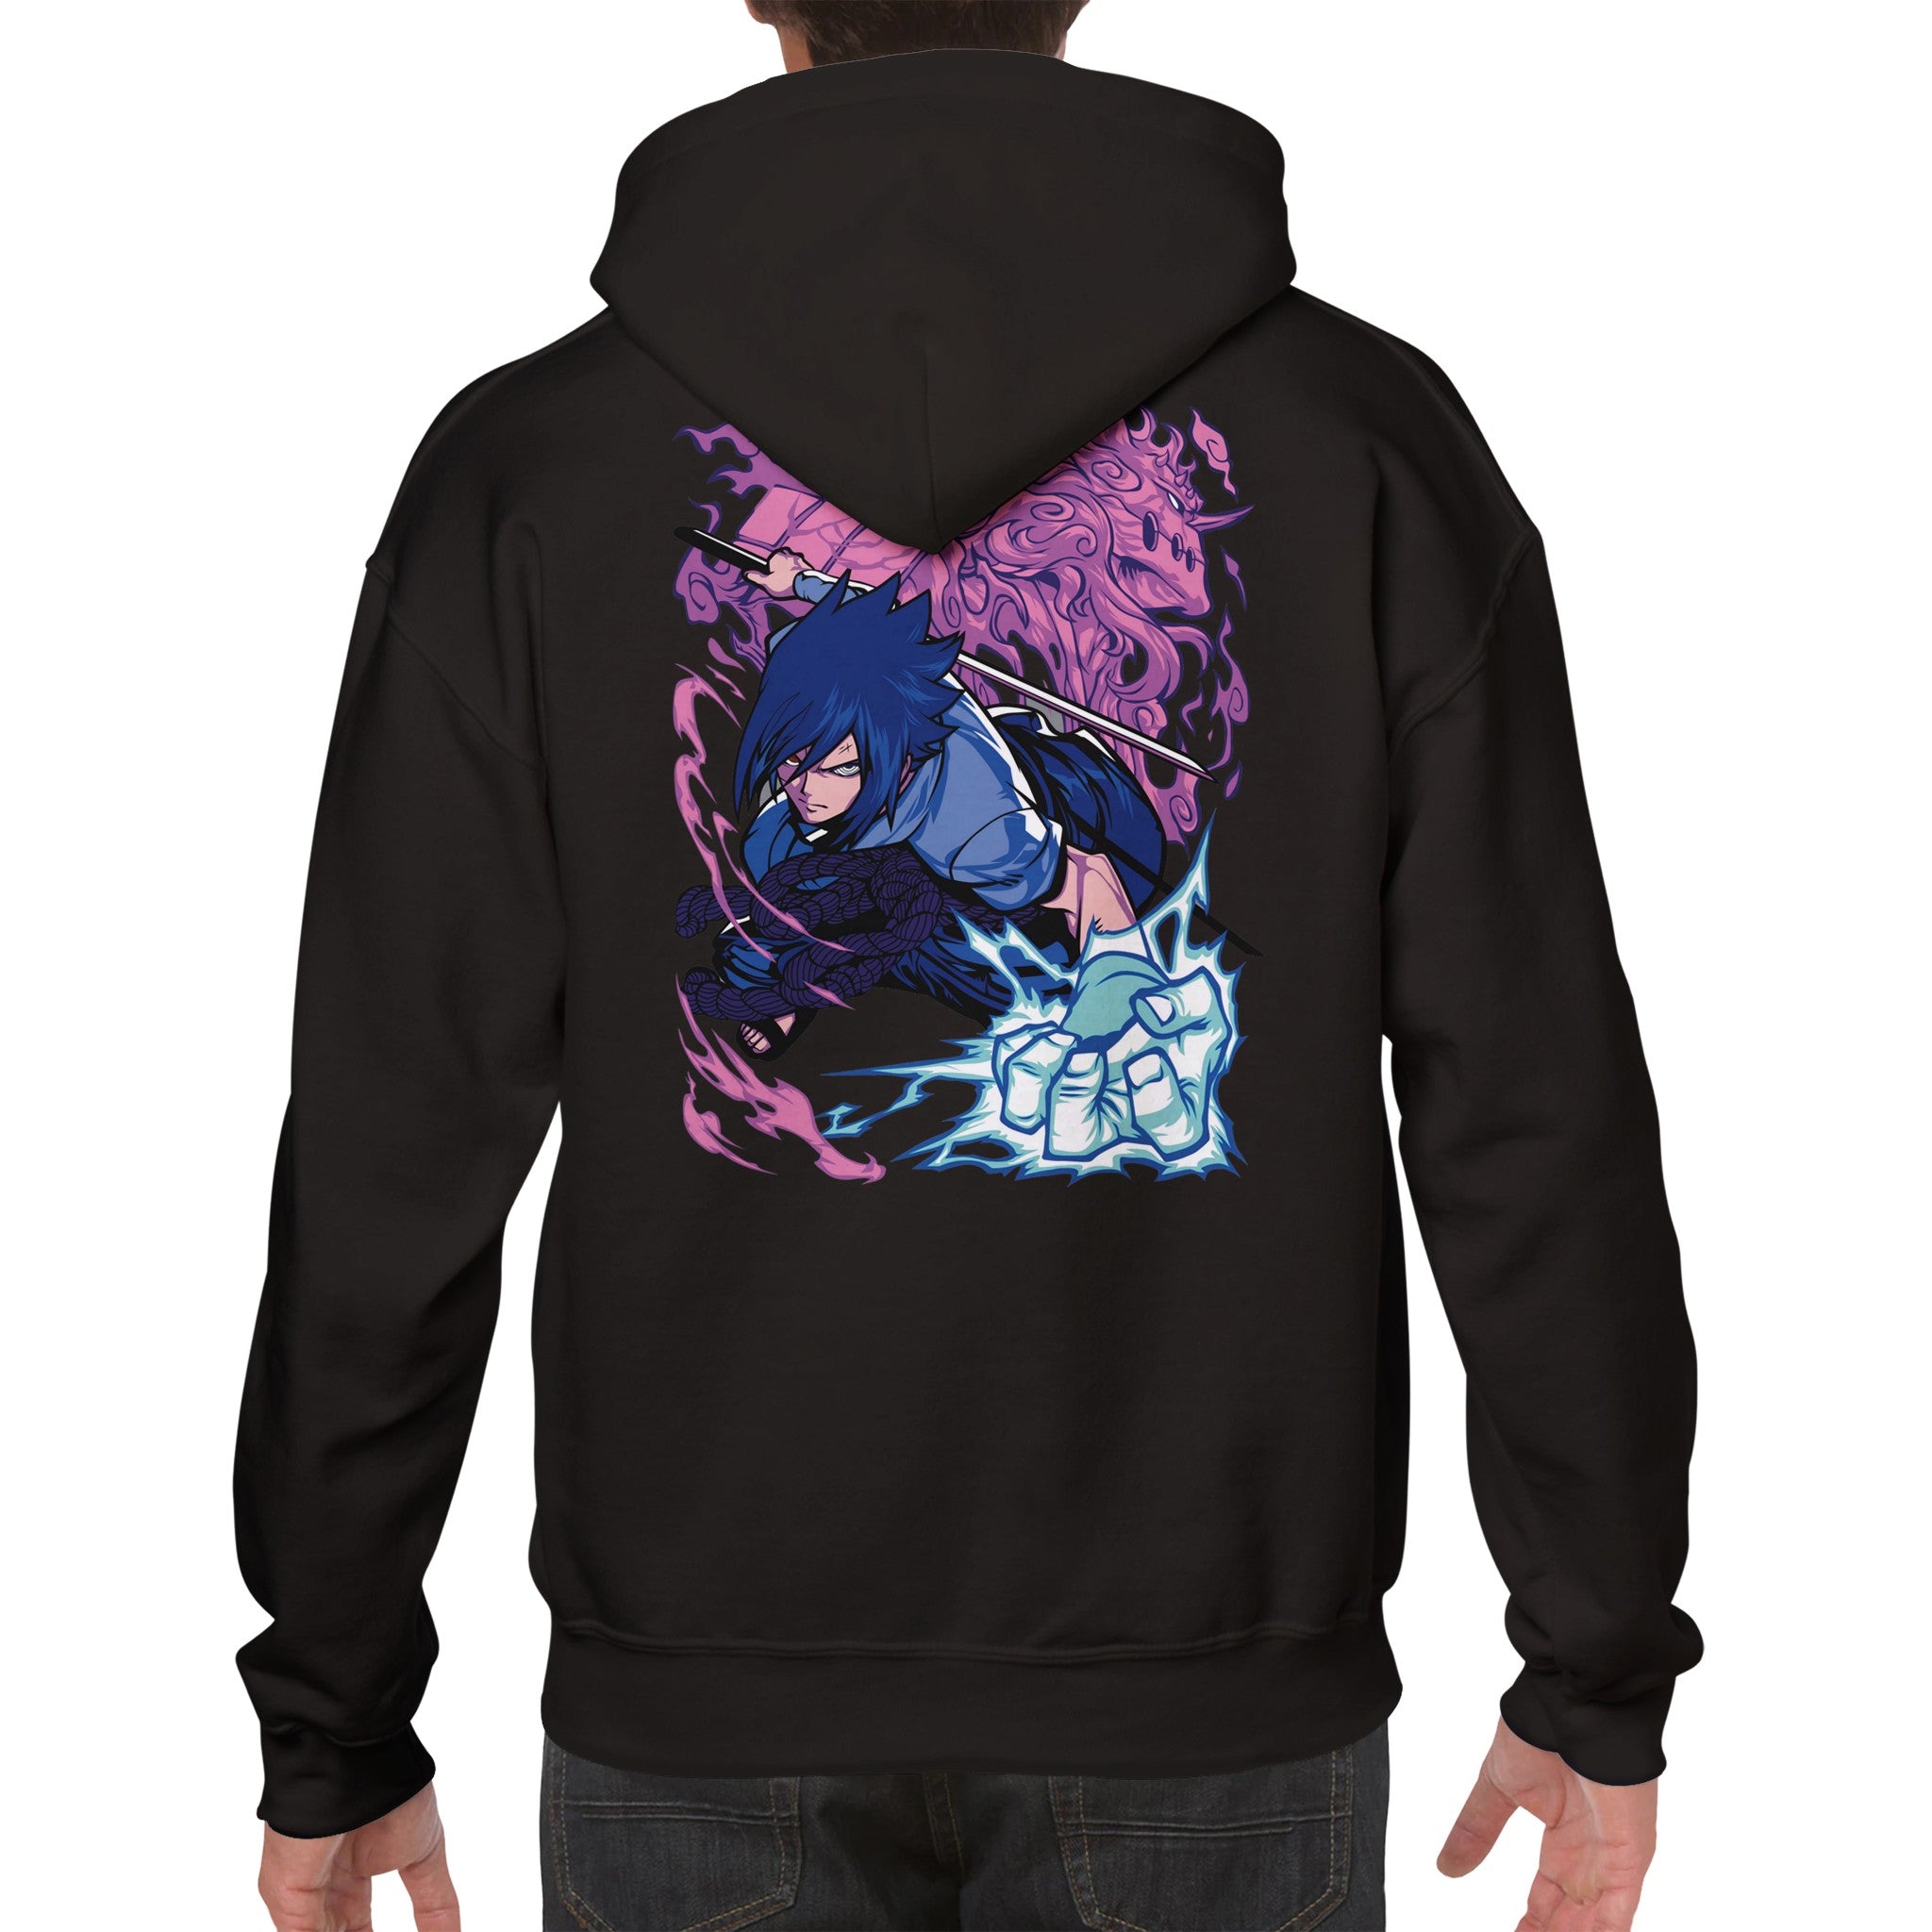 shop and buy naruto anime clothing sasuke uchiha hoodie